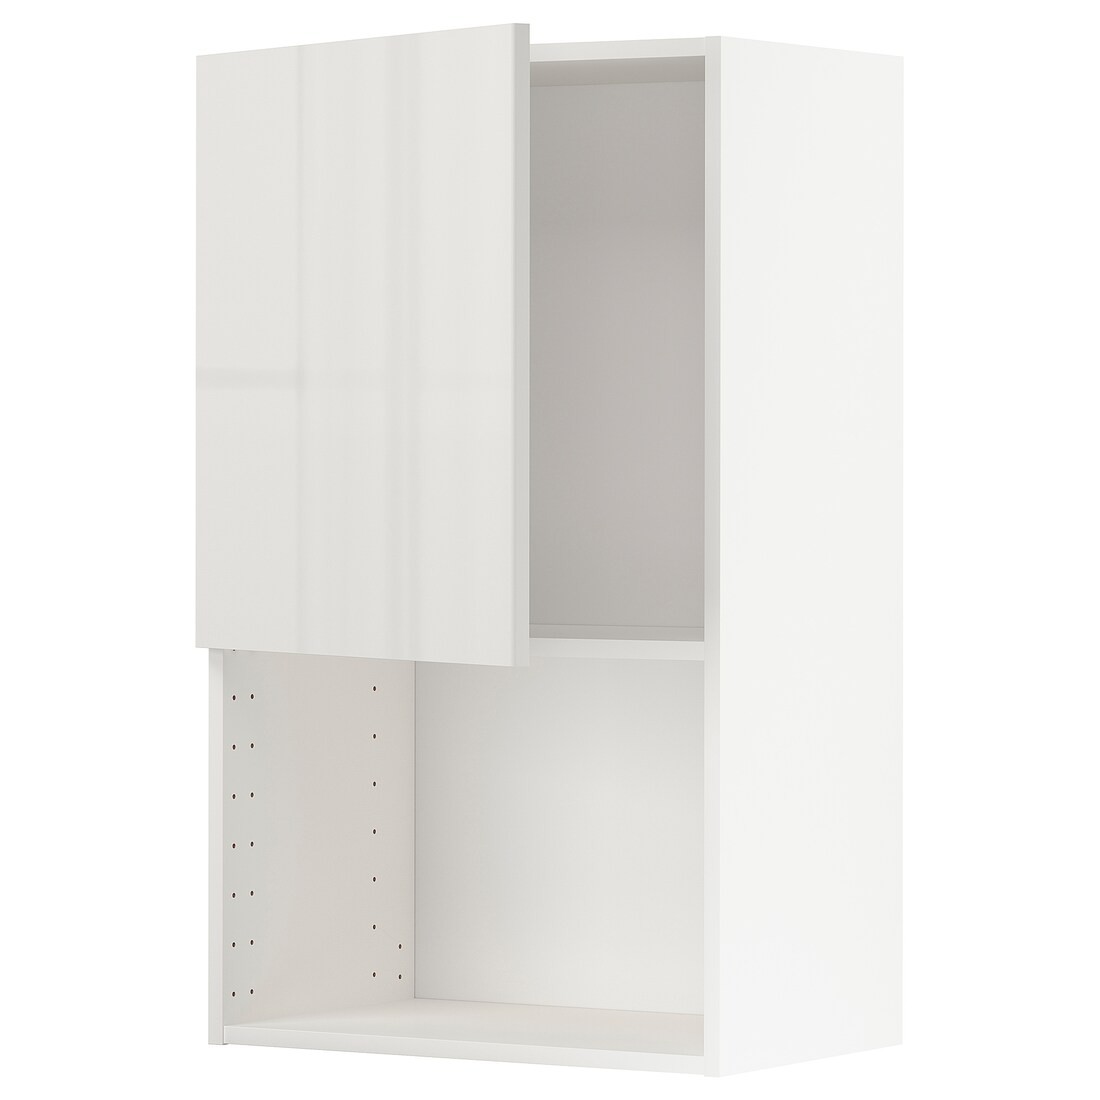 IKEA METOD МЕТОД Навесной шкаф для СВЧ-печи, белый / Ringhult светло-серый, 60x100 см 39467771 394.677.71